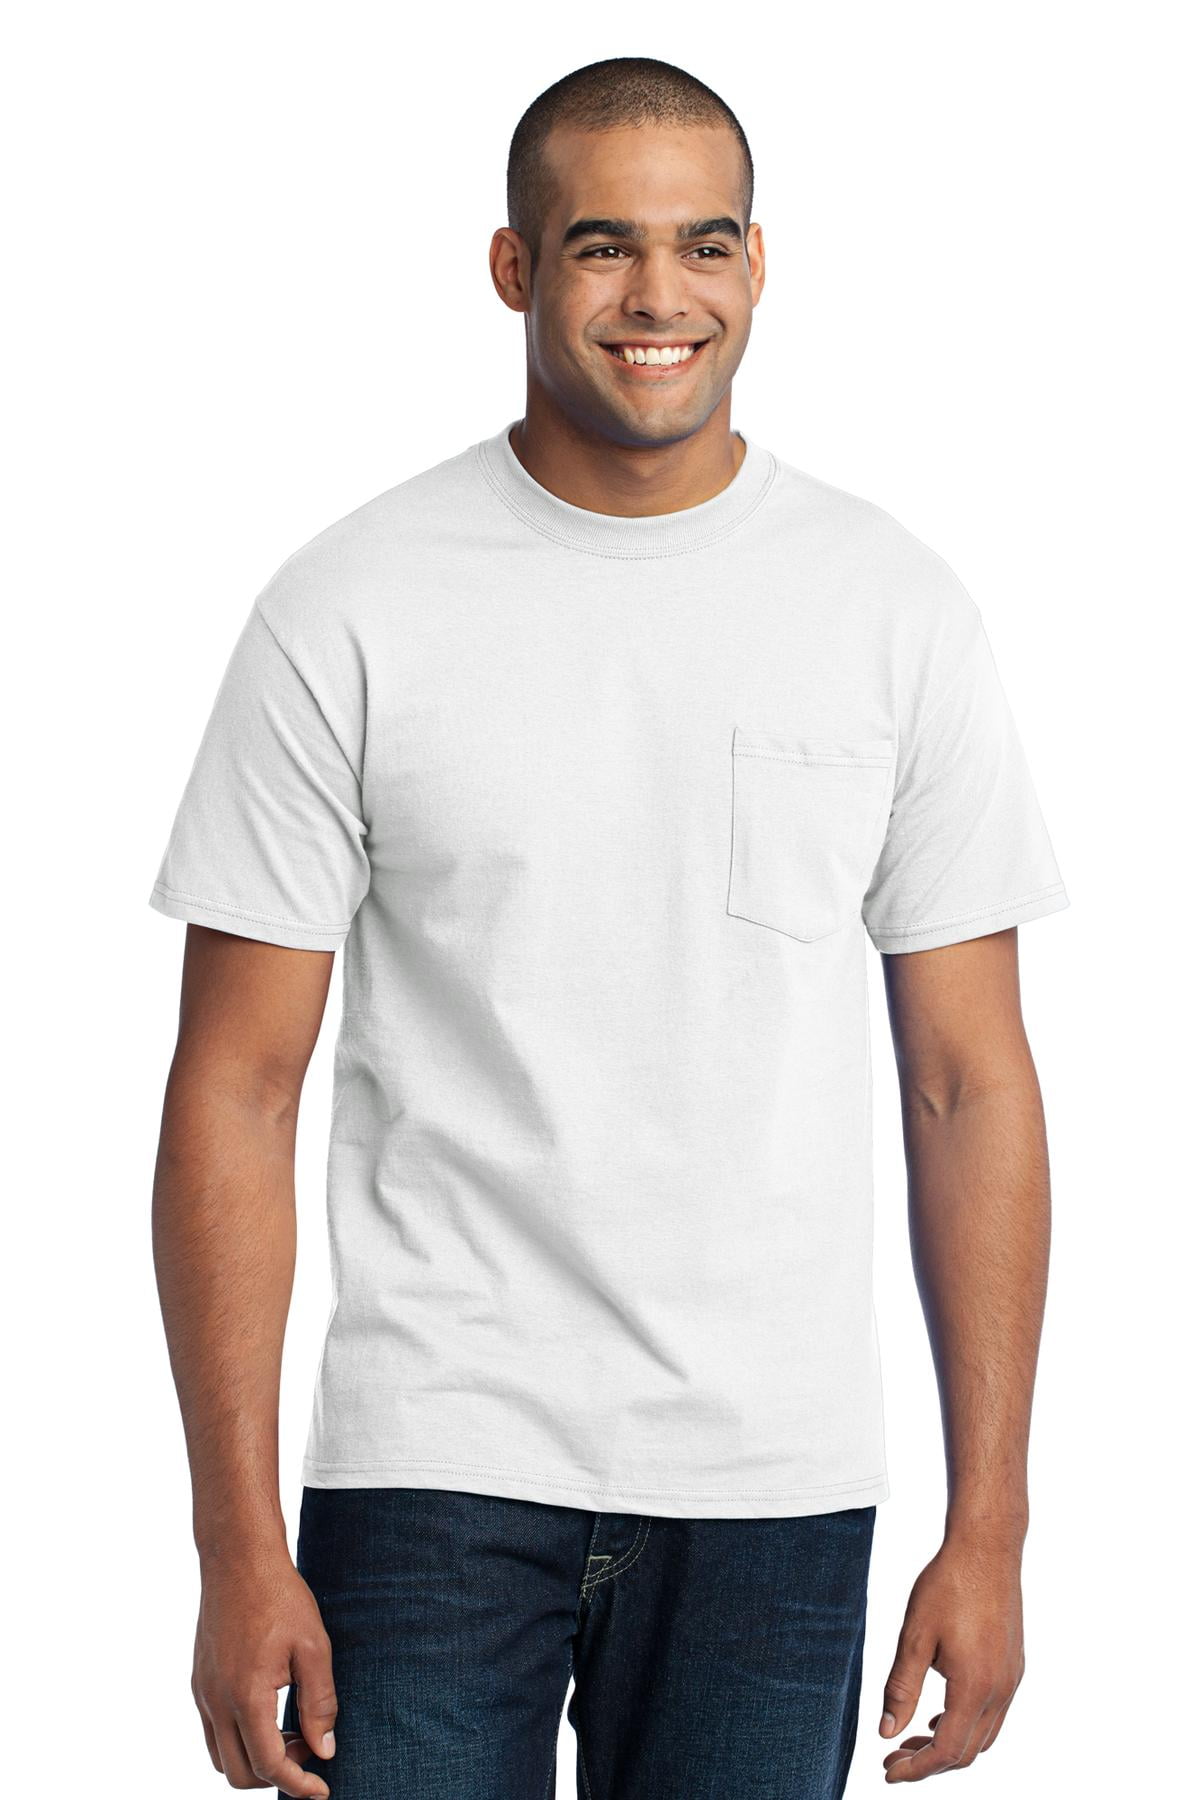 Port & Company Mens Tall 50/50 Cotton/Poly T Shirts